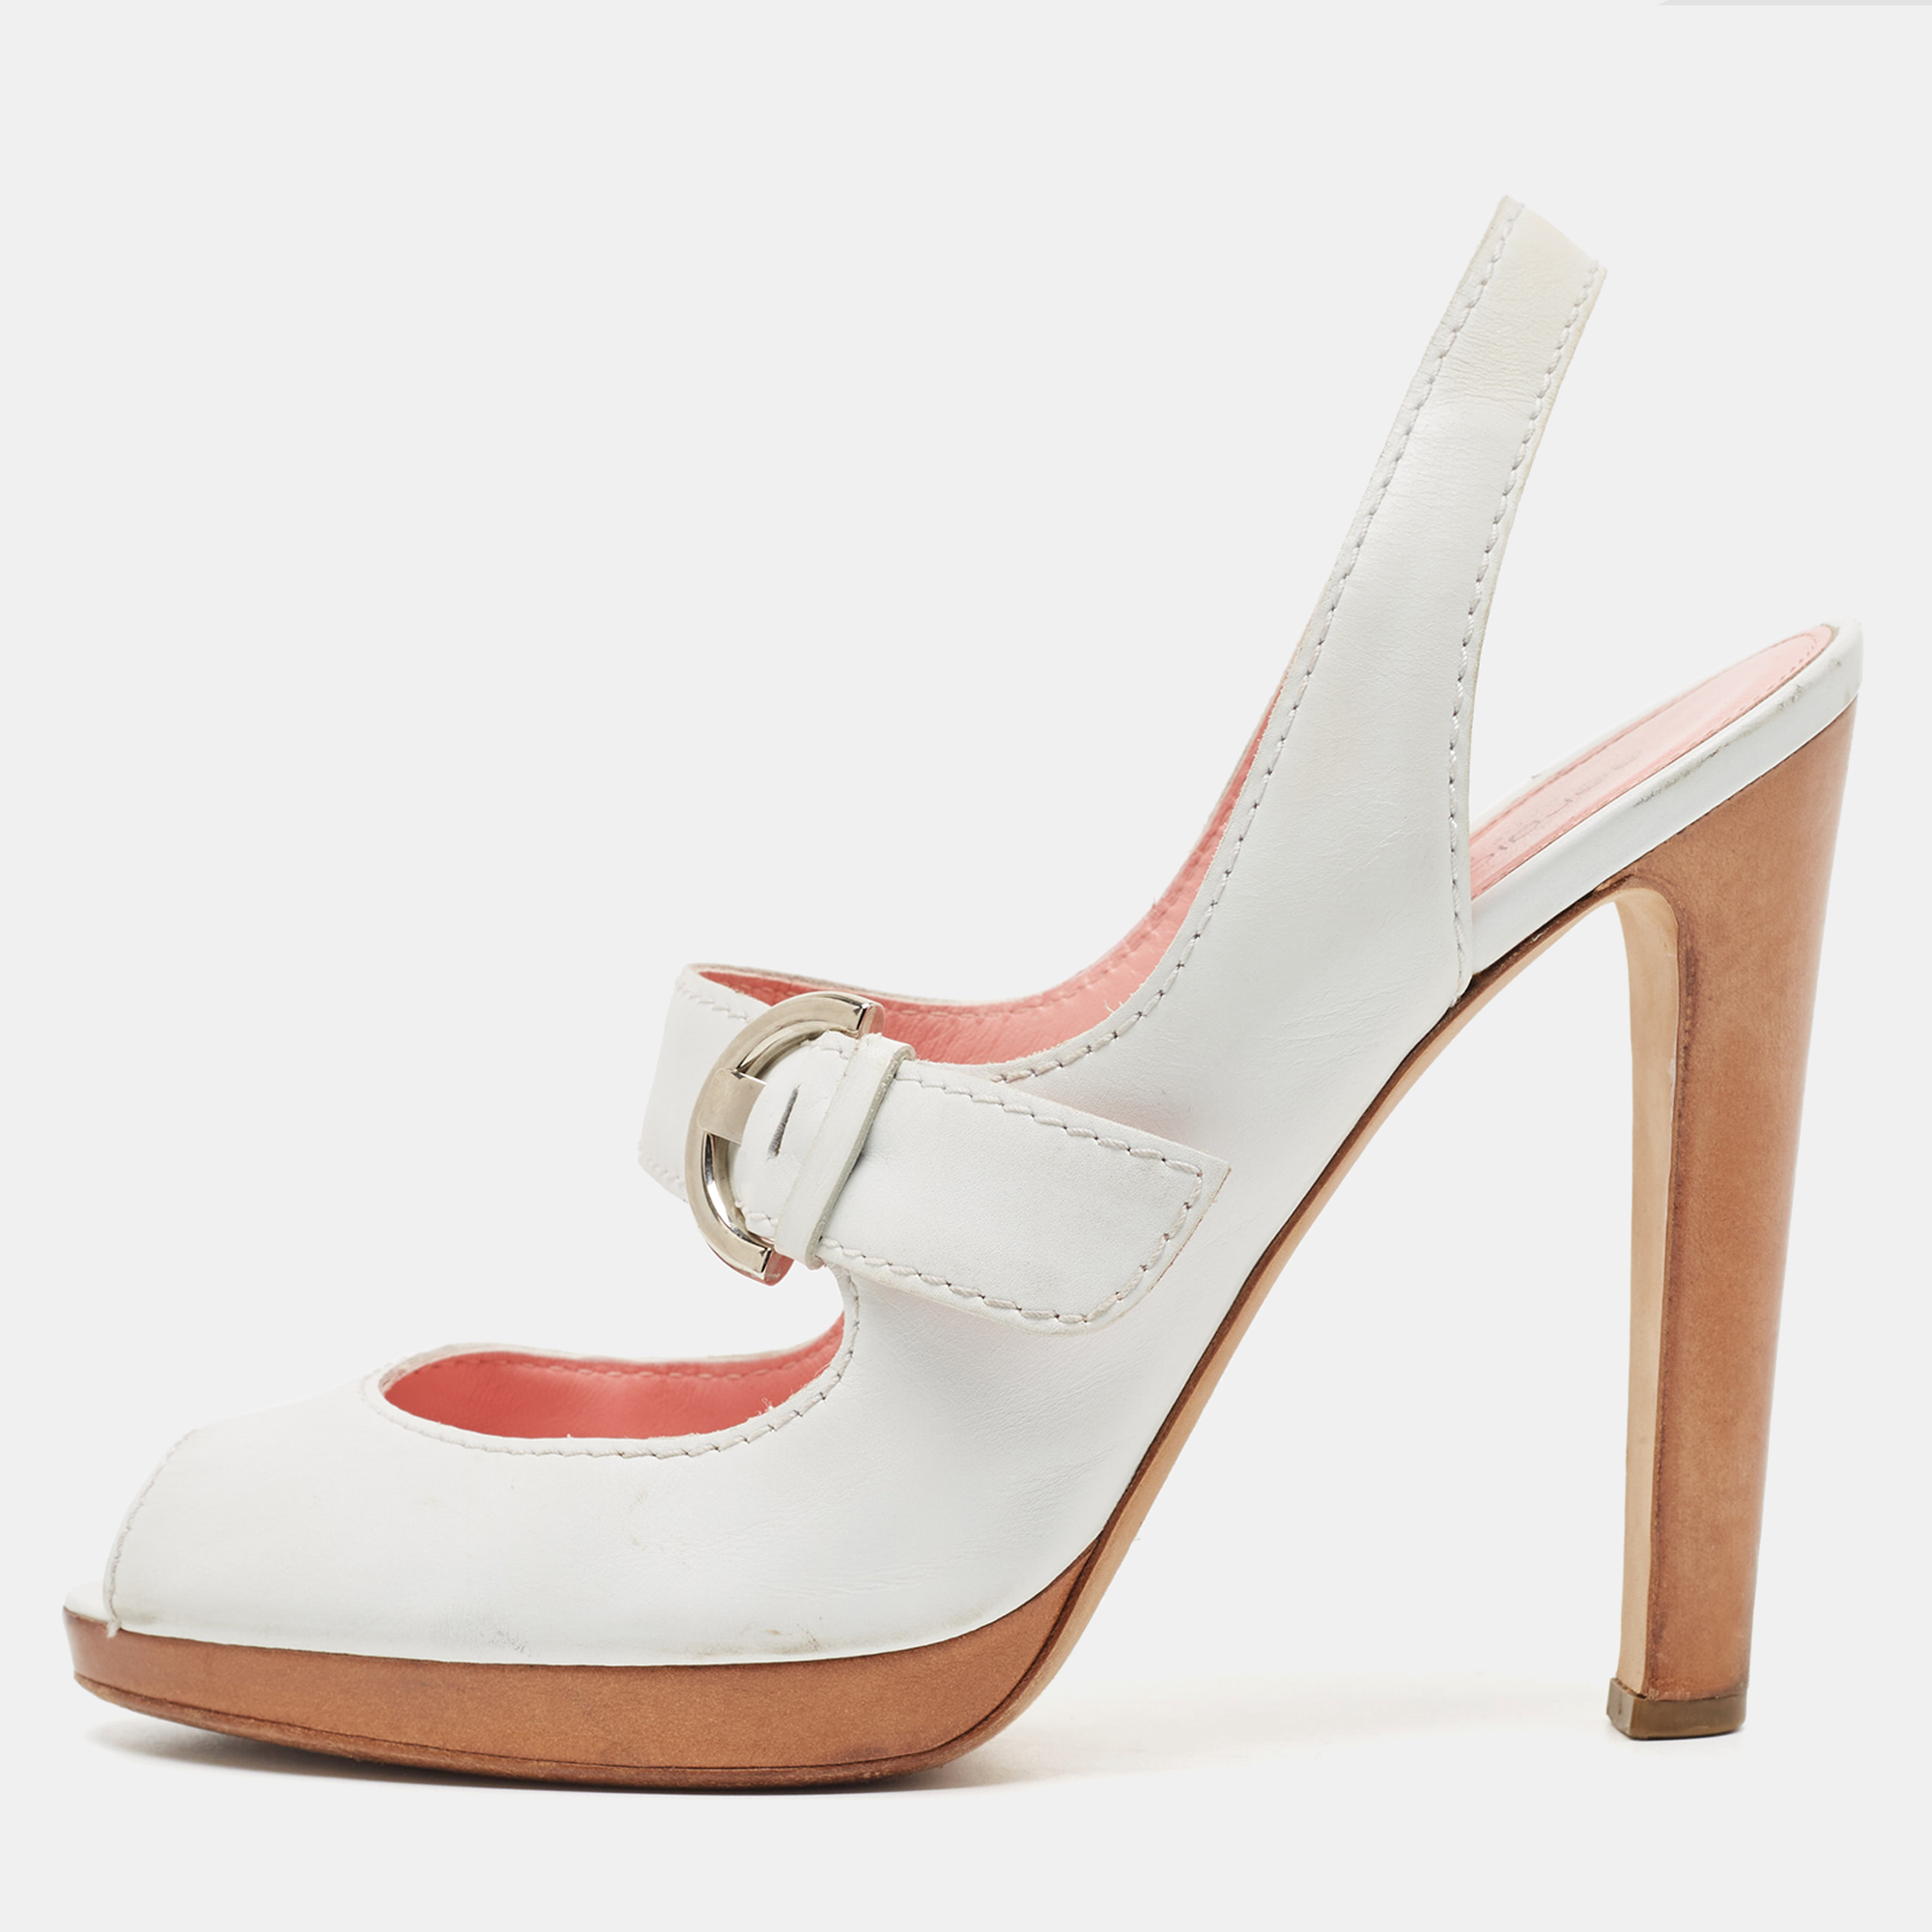 Sergio rossi white leather peep toe slingback sandals size 40